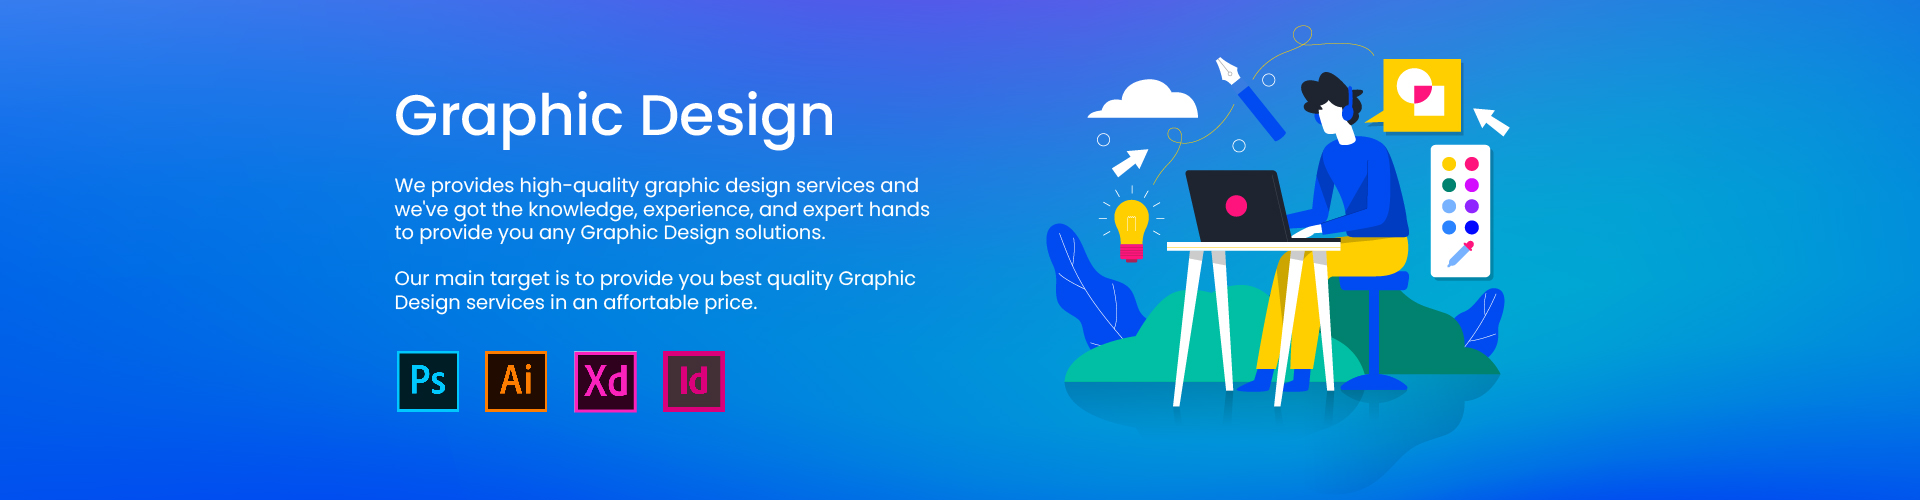 Graphic Design Service Banner Design